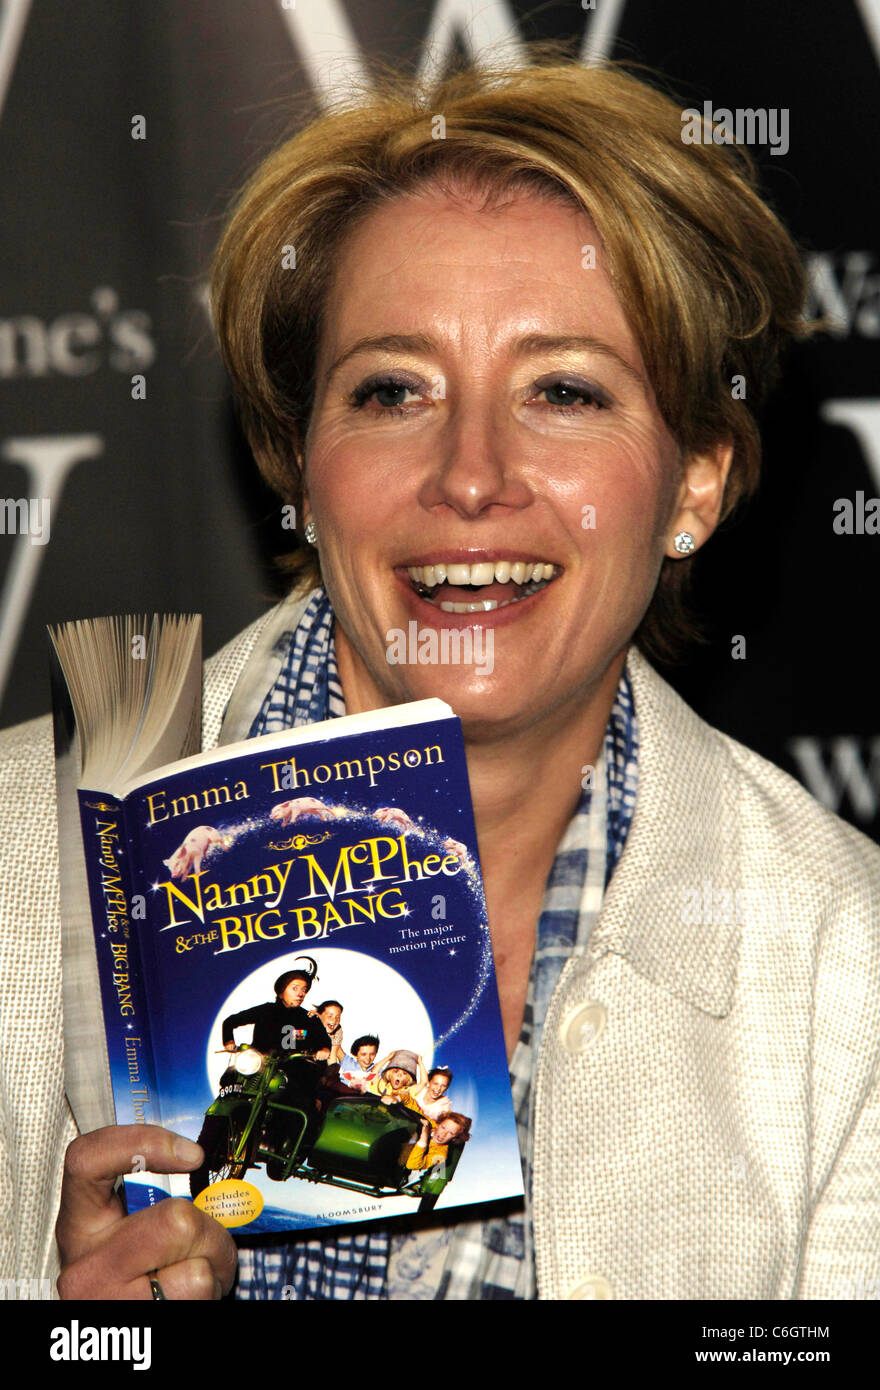 Emma Thompson segni copie del suo nuovo libro "Nanny McPhee & The Big Bang a Waterstones Piccadilly Londra Inghilterra - 06.03.10 Foto Stock